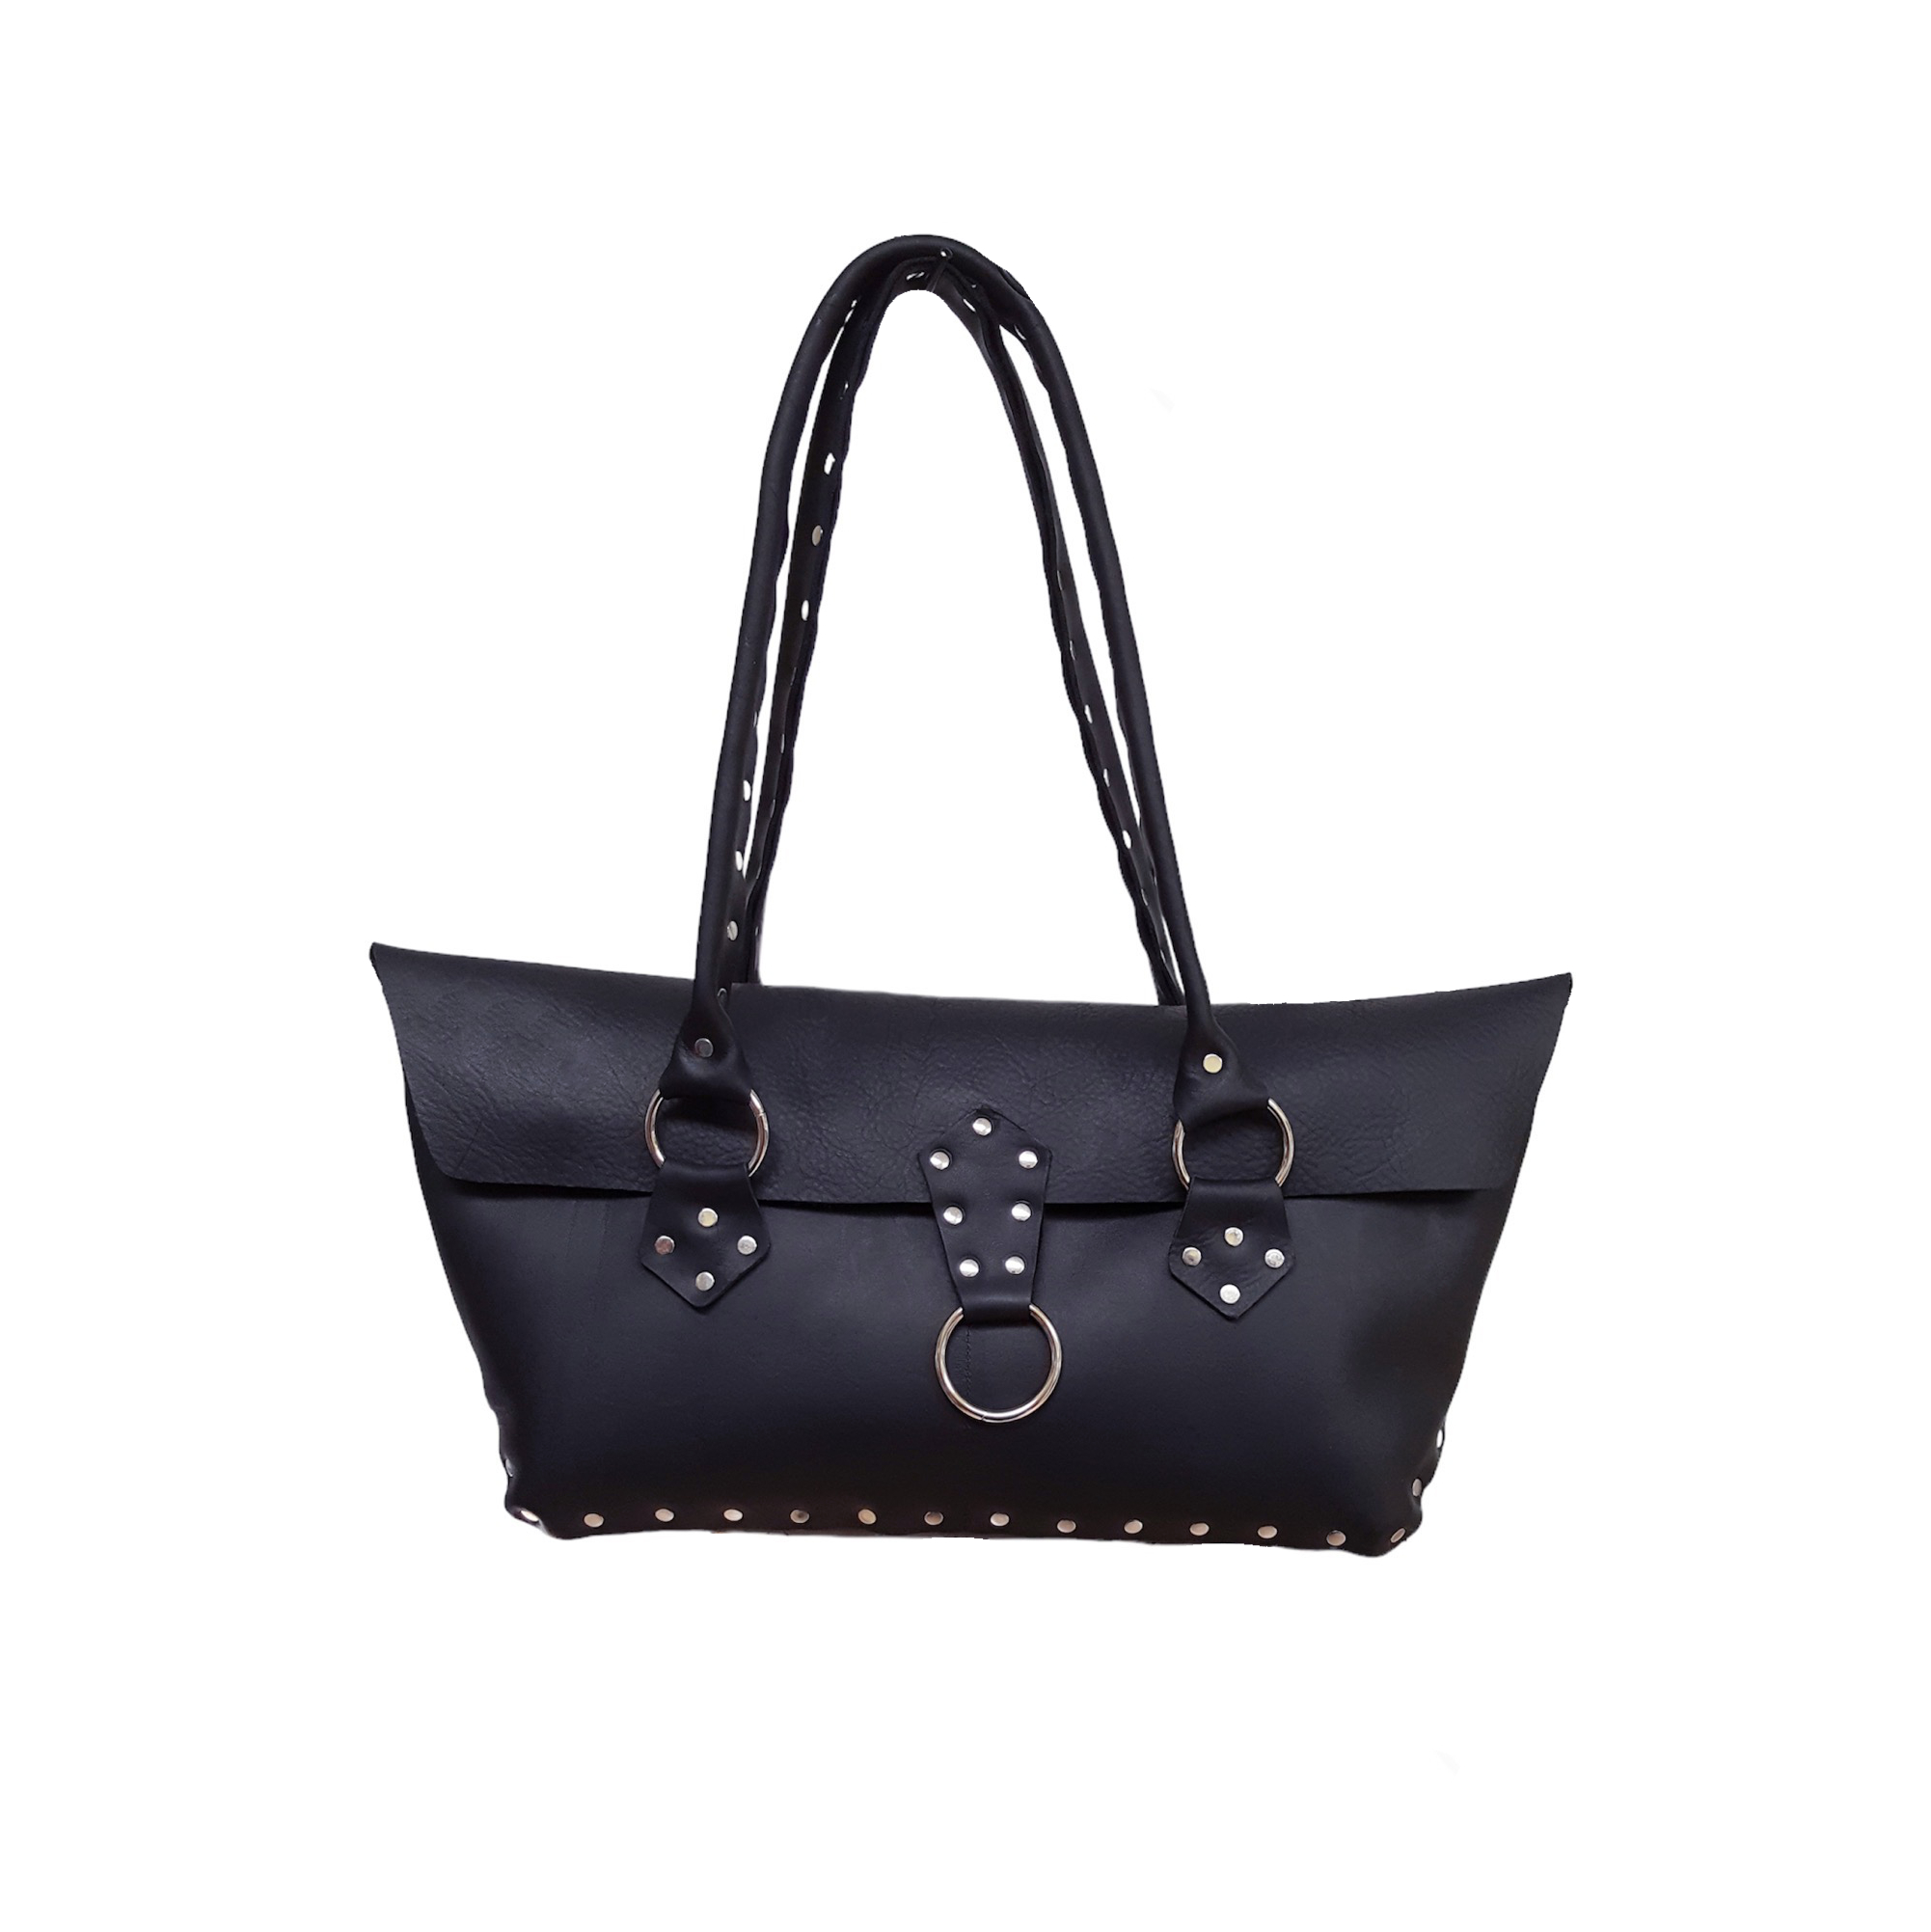 Black riveted purse